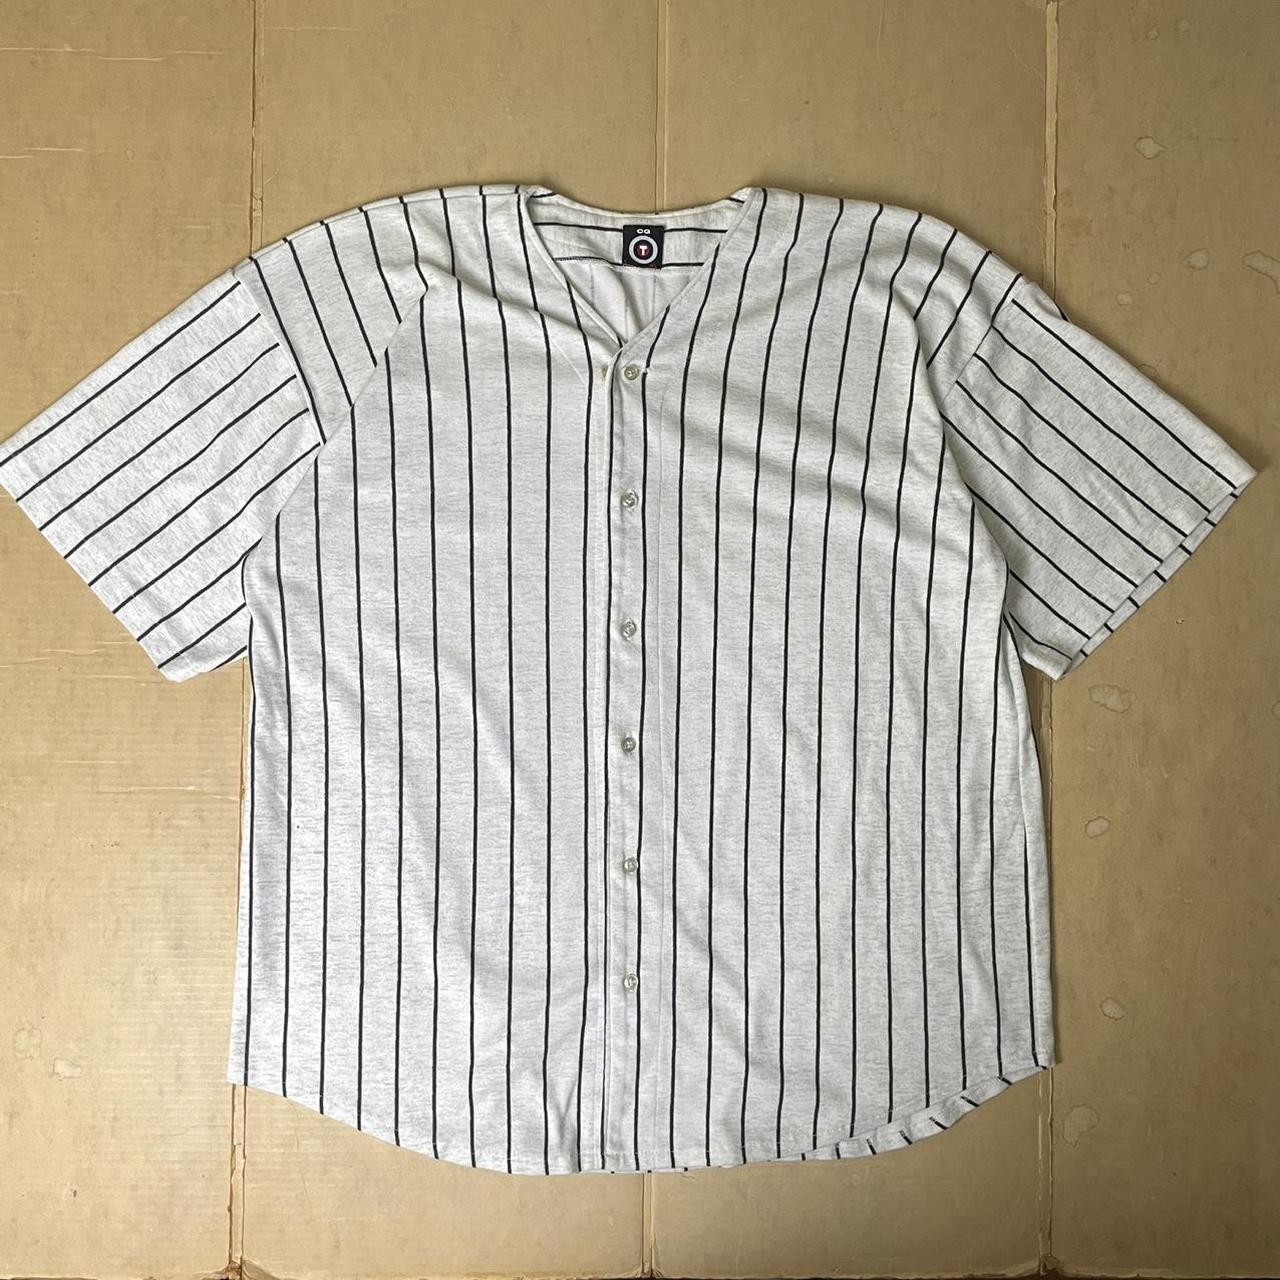 Pin on Baseball shirts